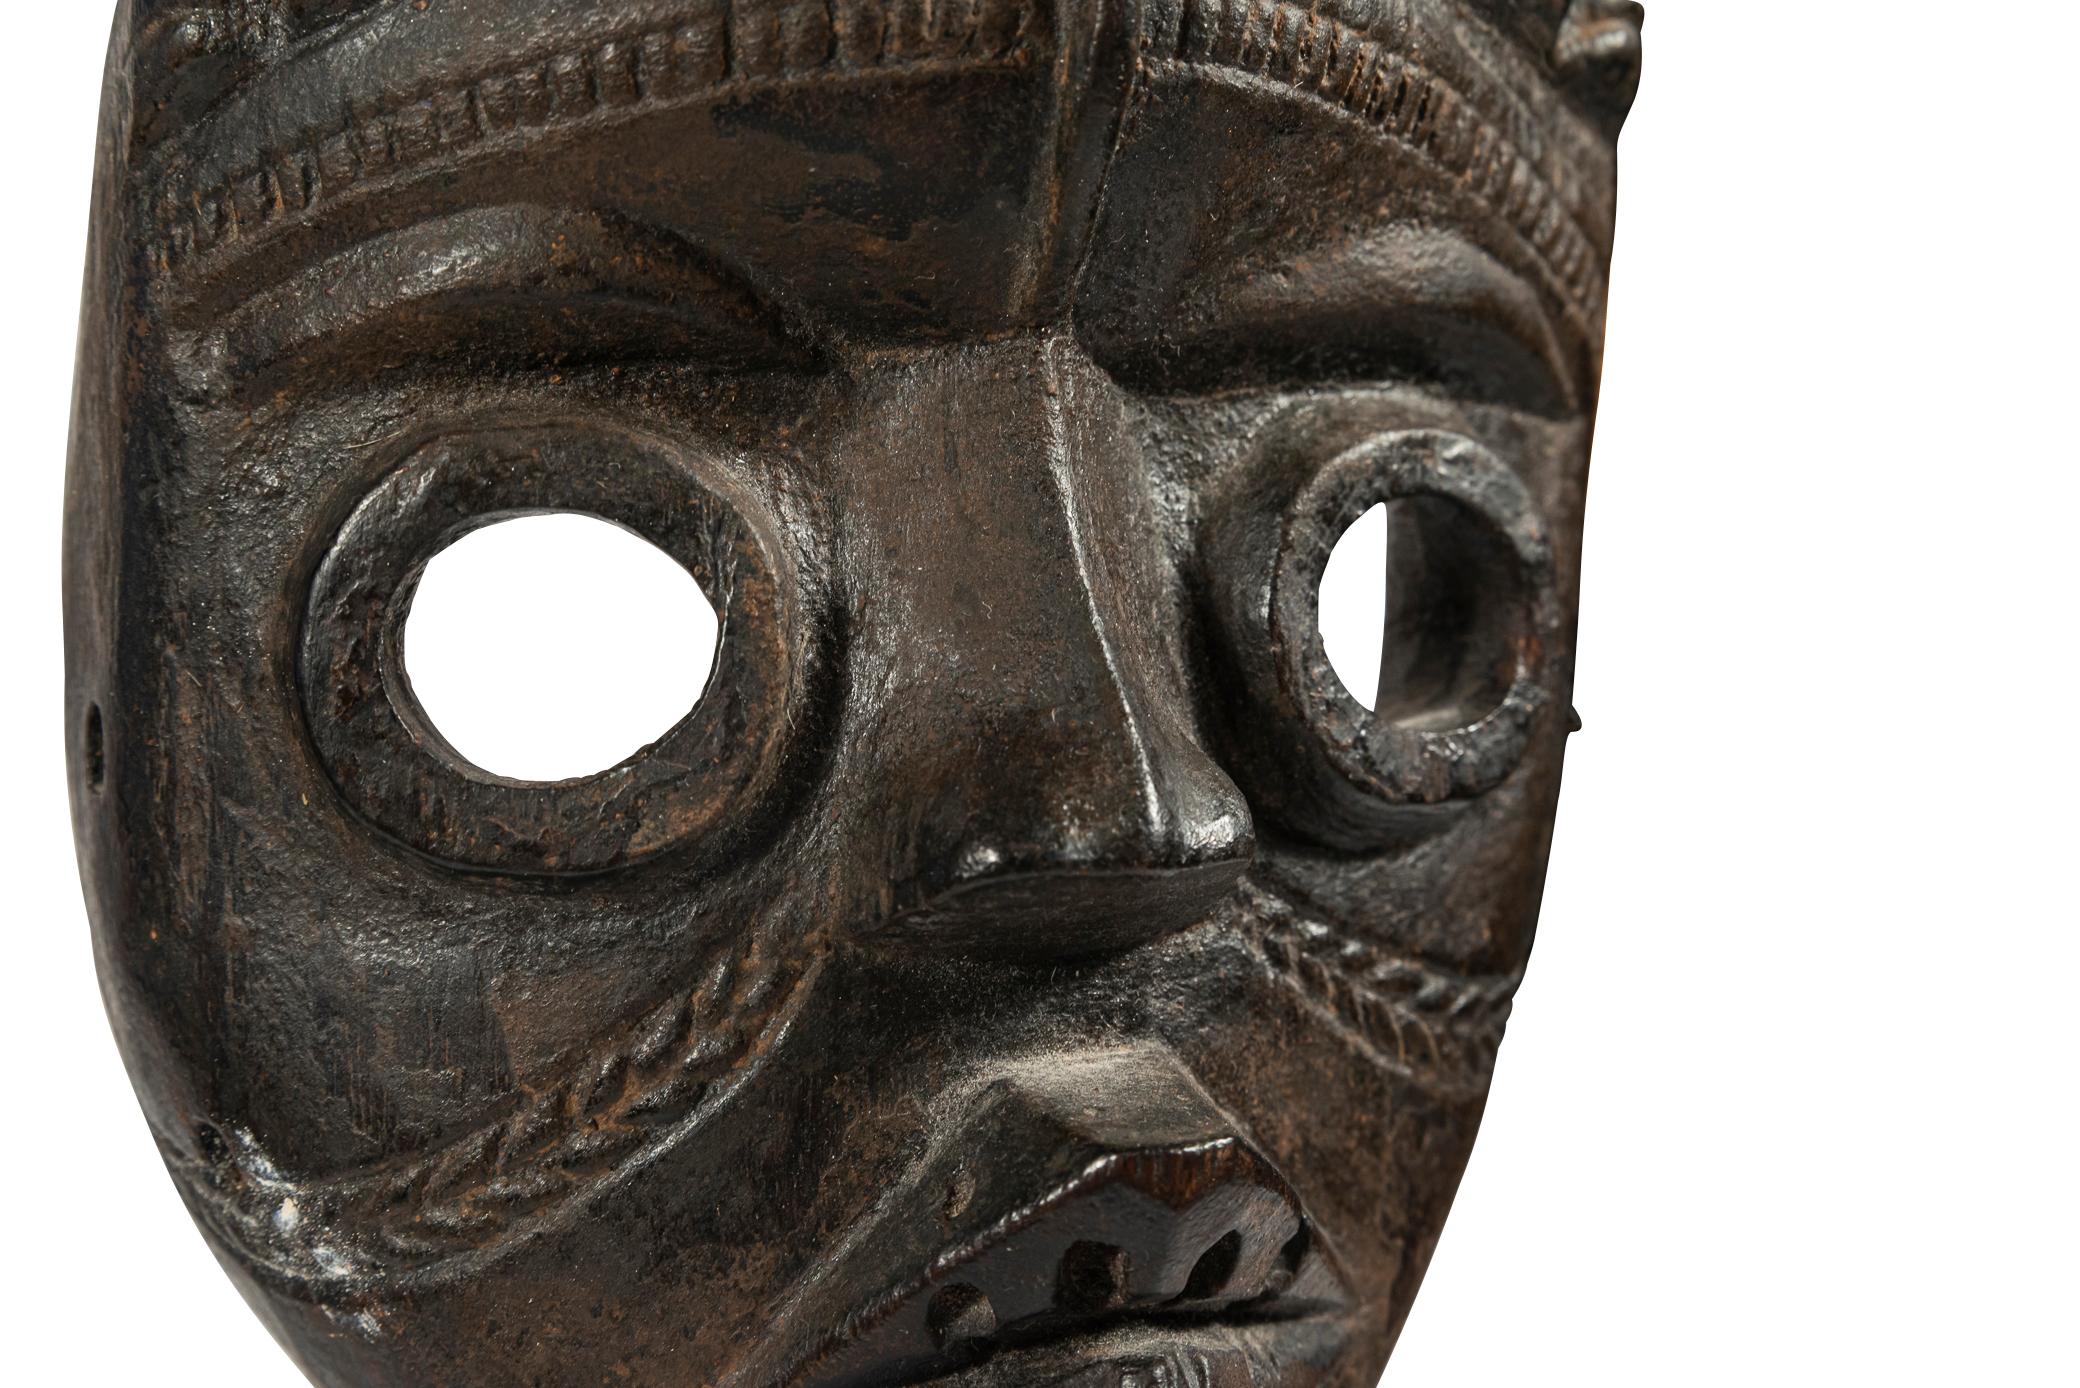 Wood Dan-Toure, Face Mask, Ivory Coast, Late 19th Century